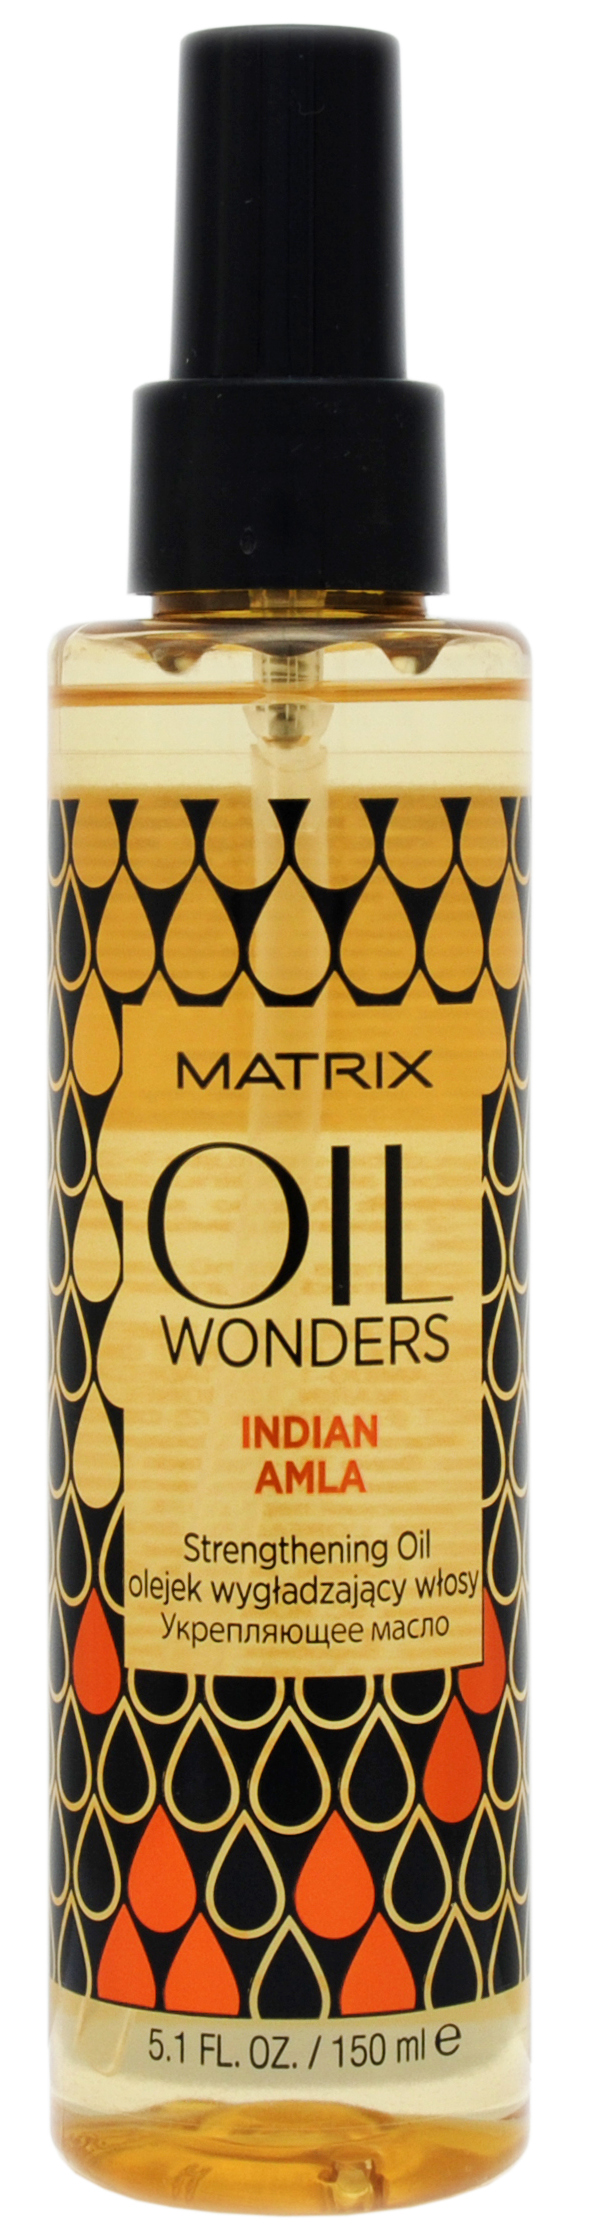 Matrix oil wonders укрепляющее масло indian amla 150мл БС